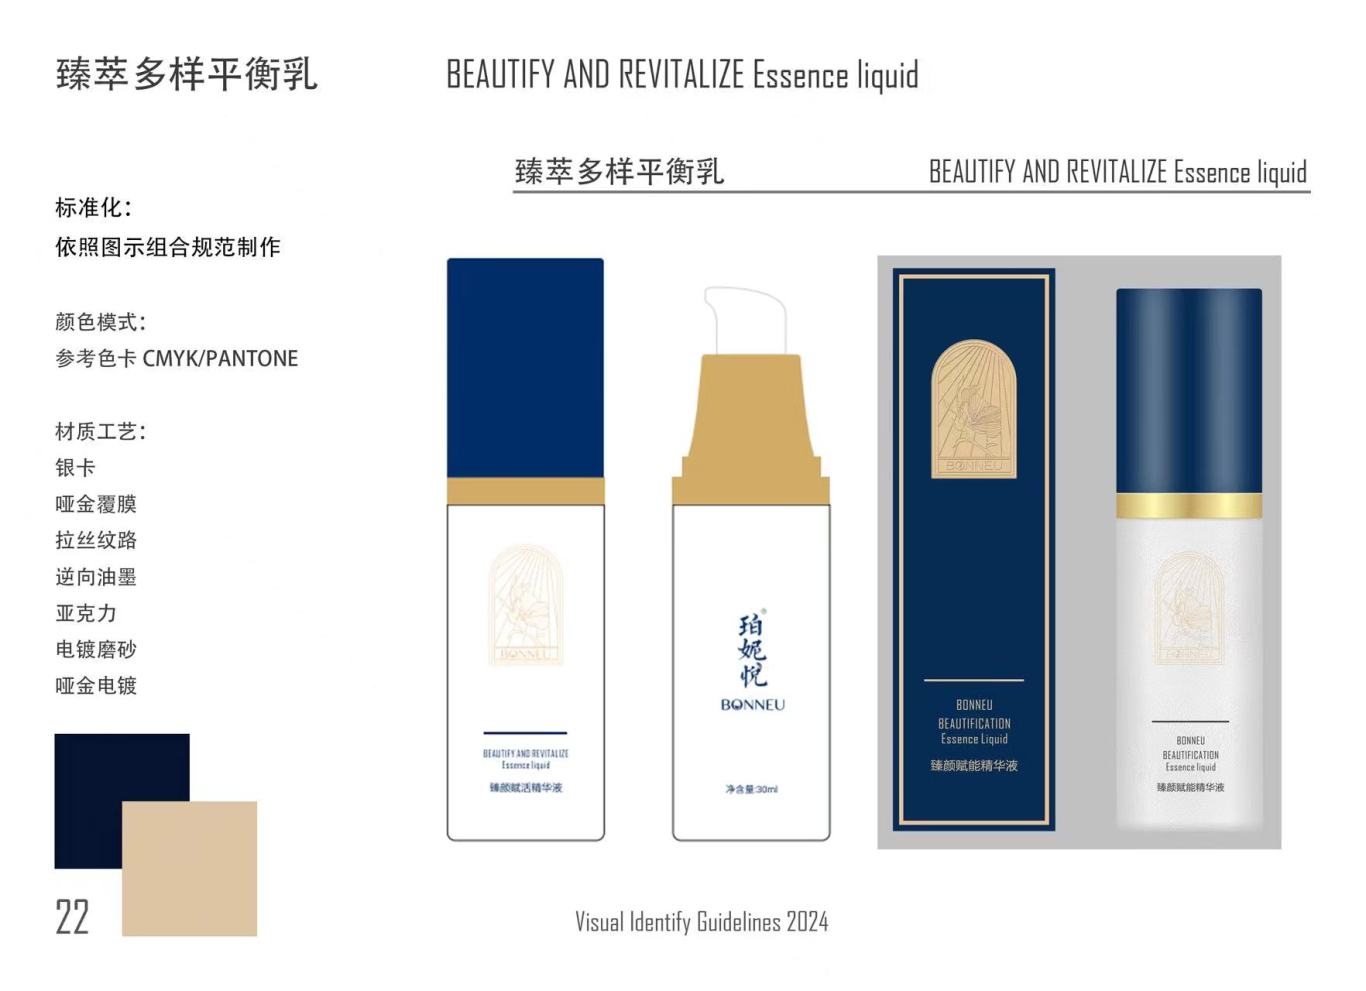 BONNEU国姿铂妮悦 民族护肤品牌 包装设计及品牌策划图21